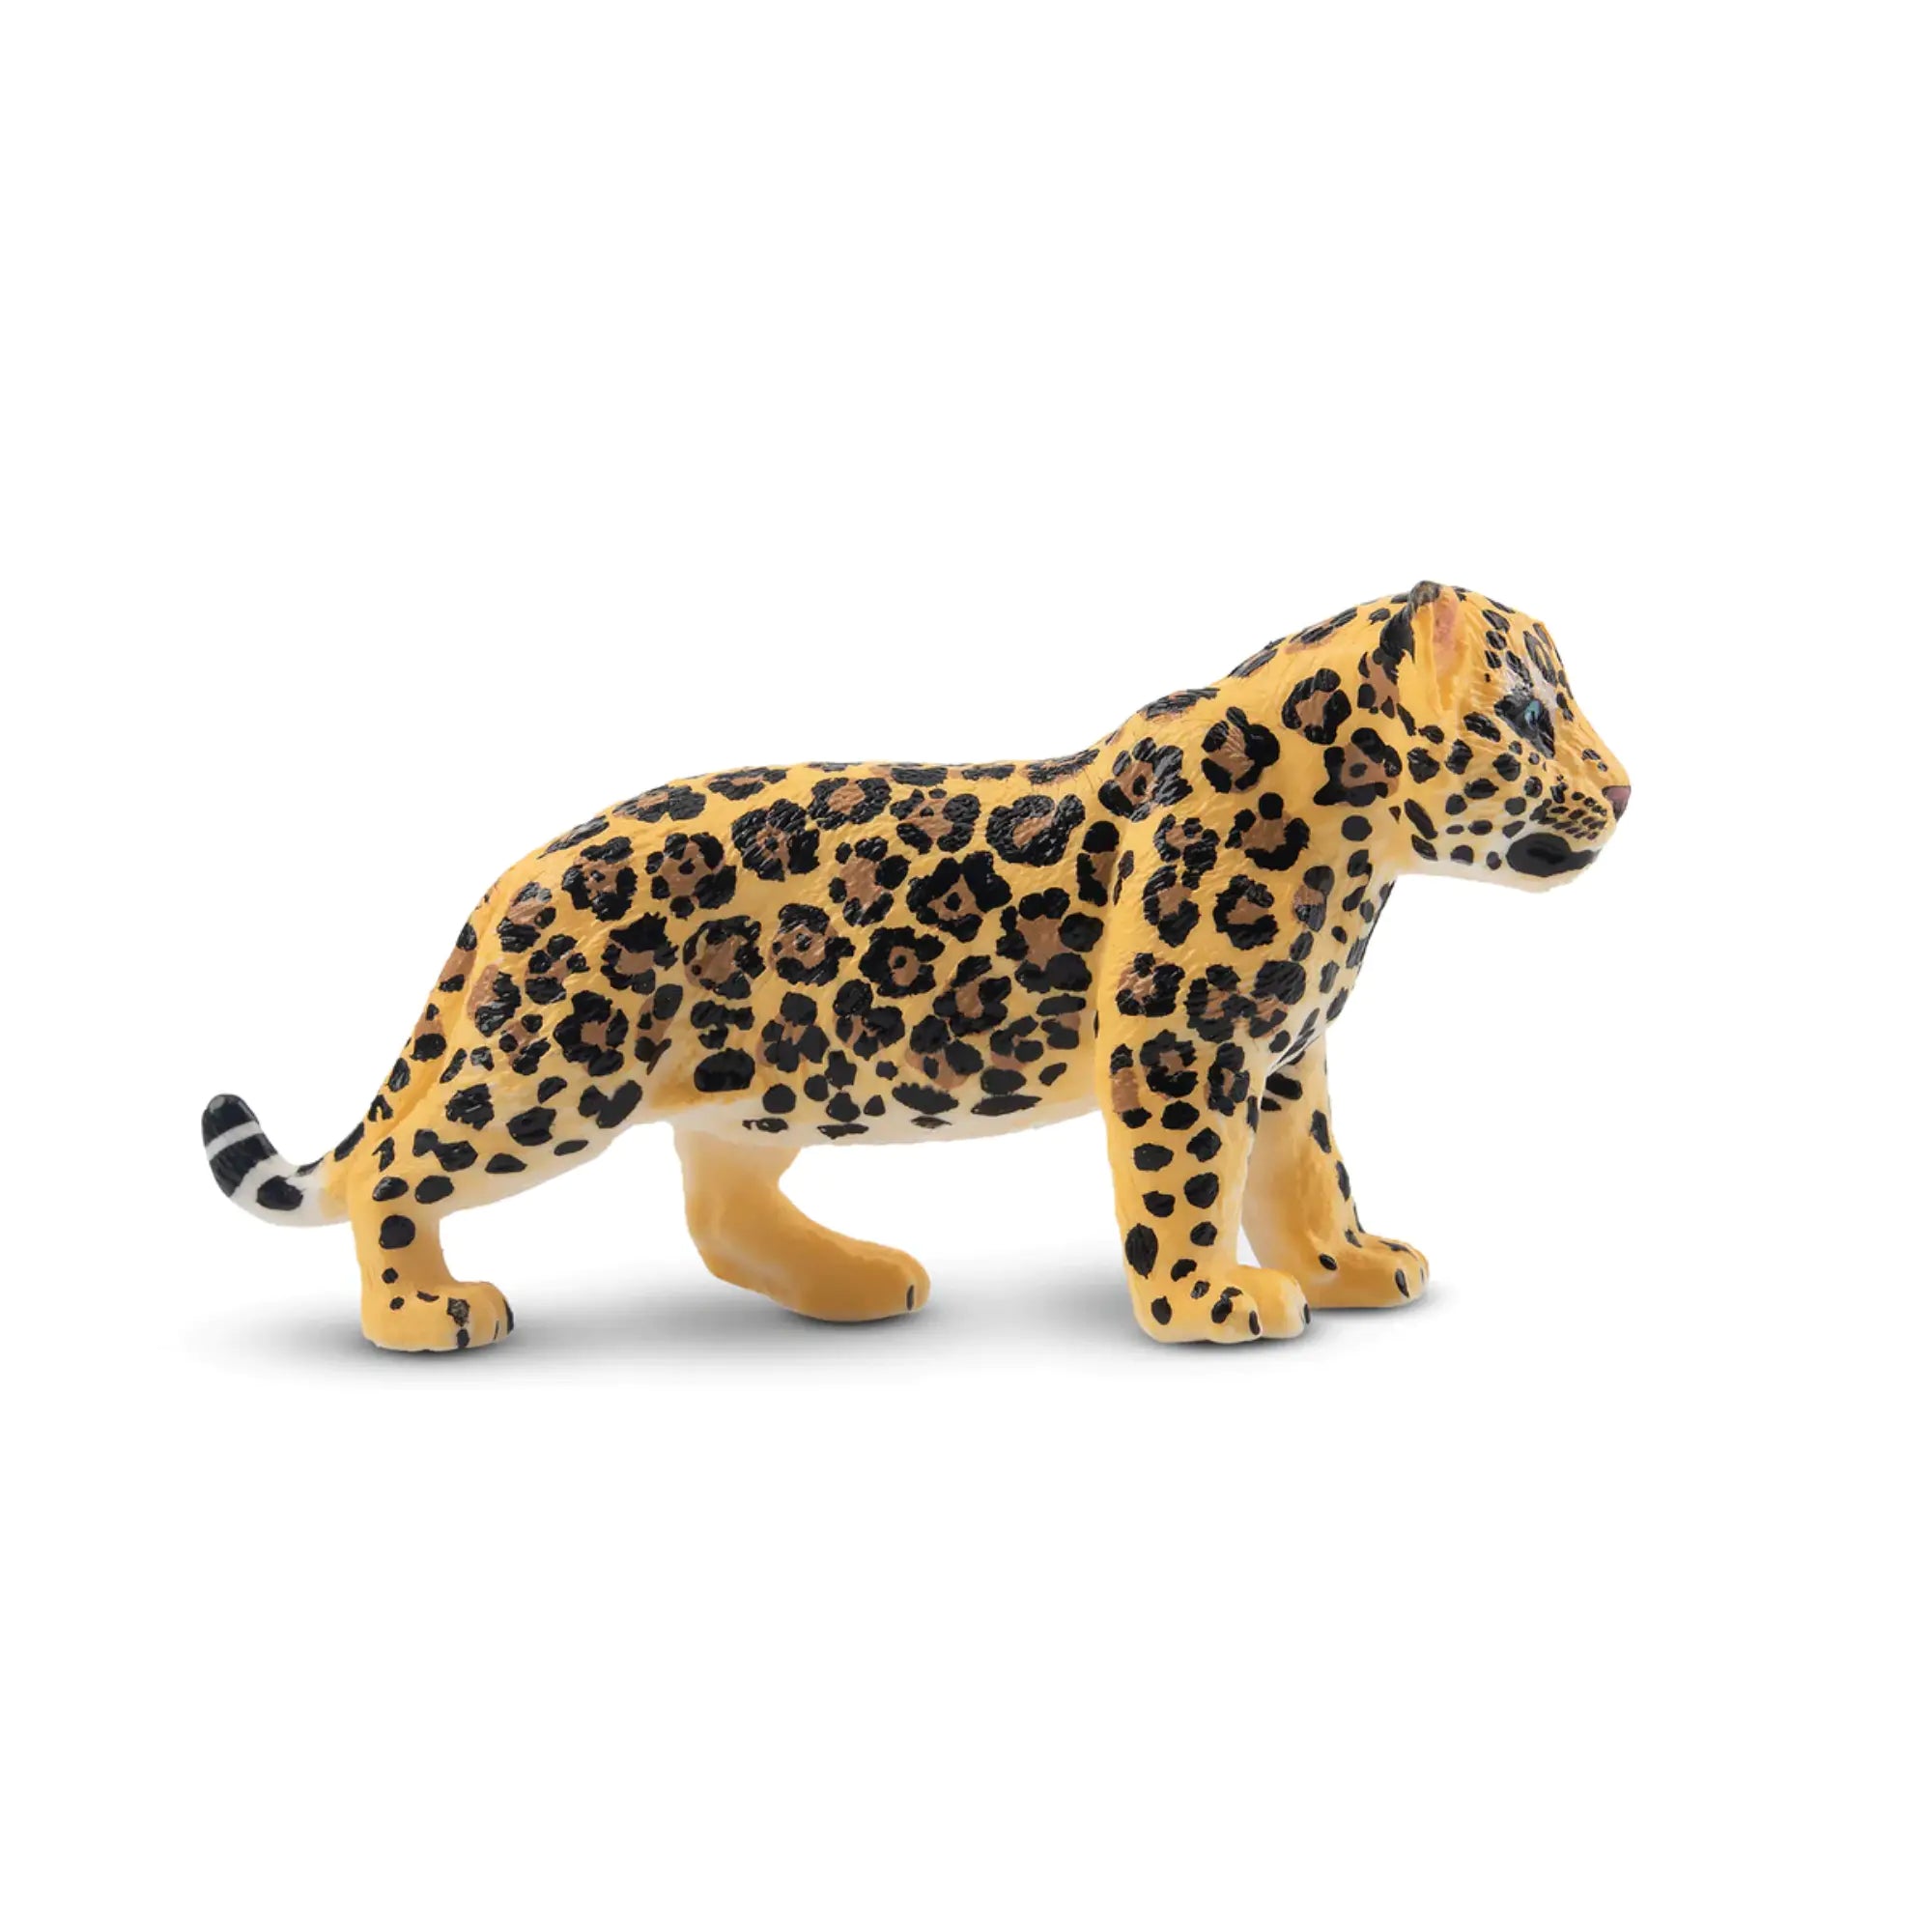 Toymany Jaguarjunges-Figuren-Spielzeug